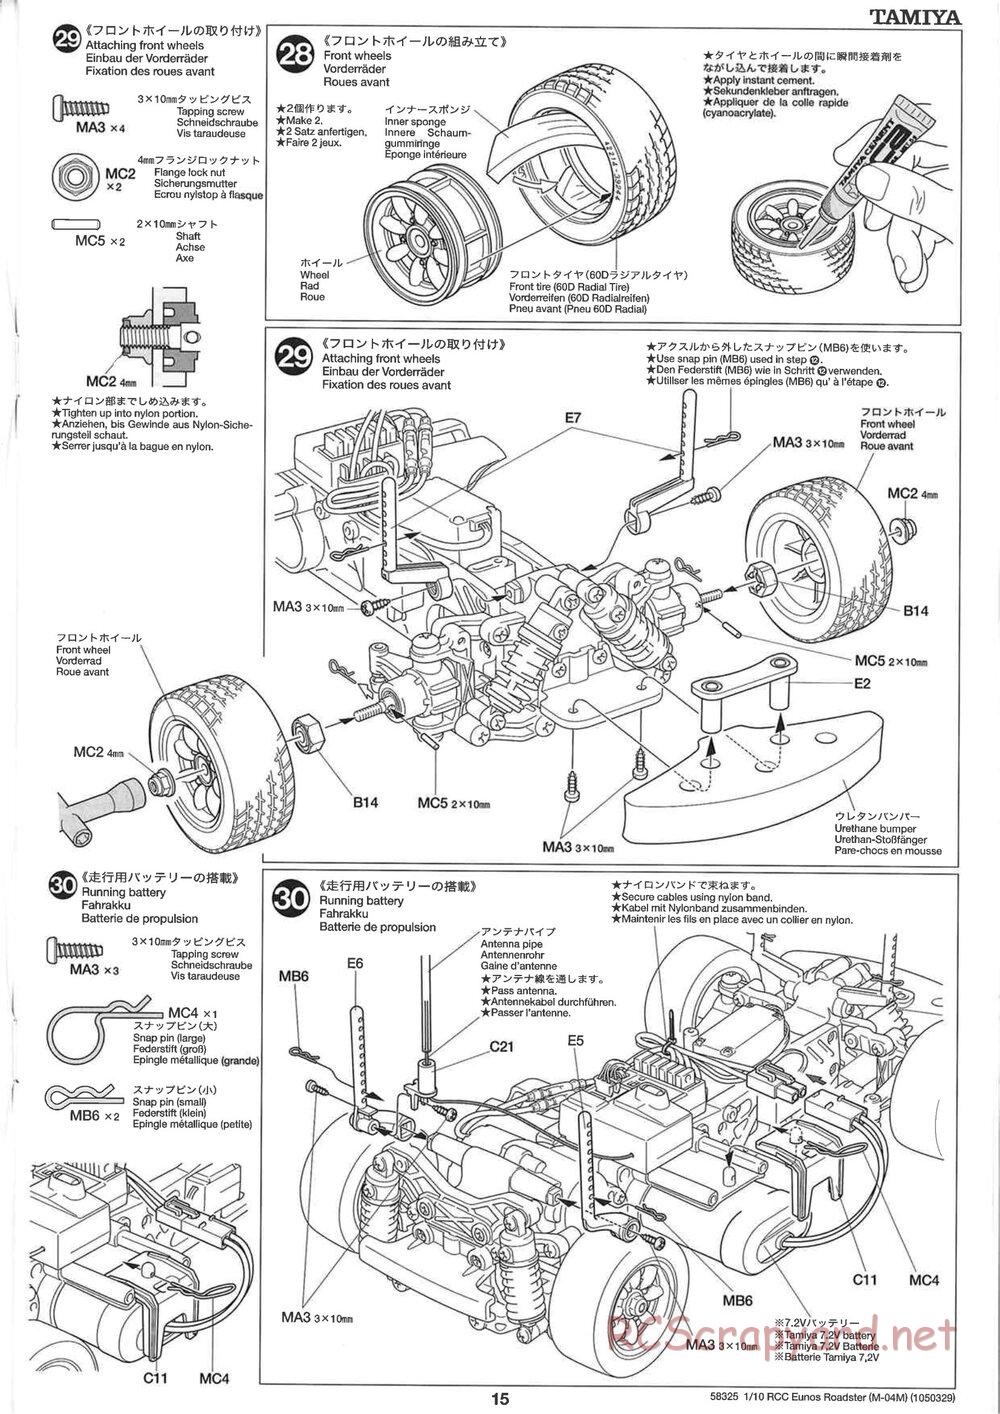 Tamiya - Eunos Roadster - M04M Chassis - Manual - Page 15